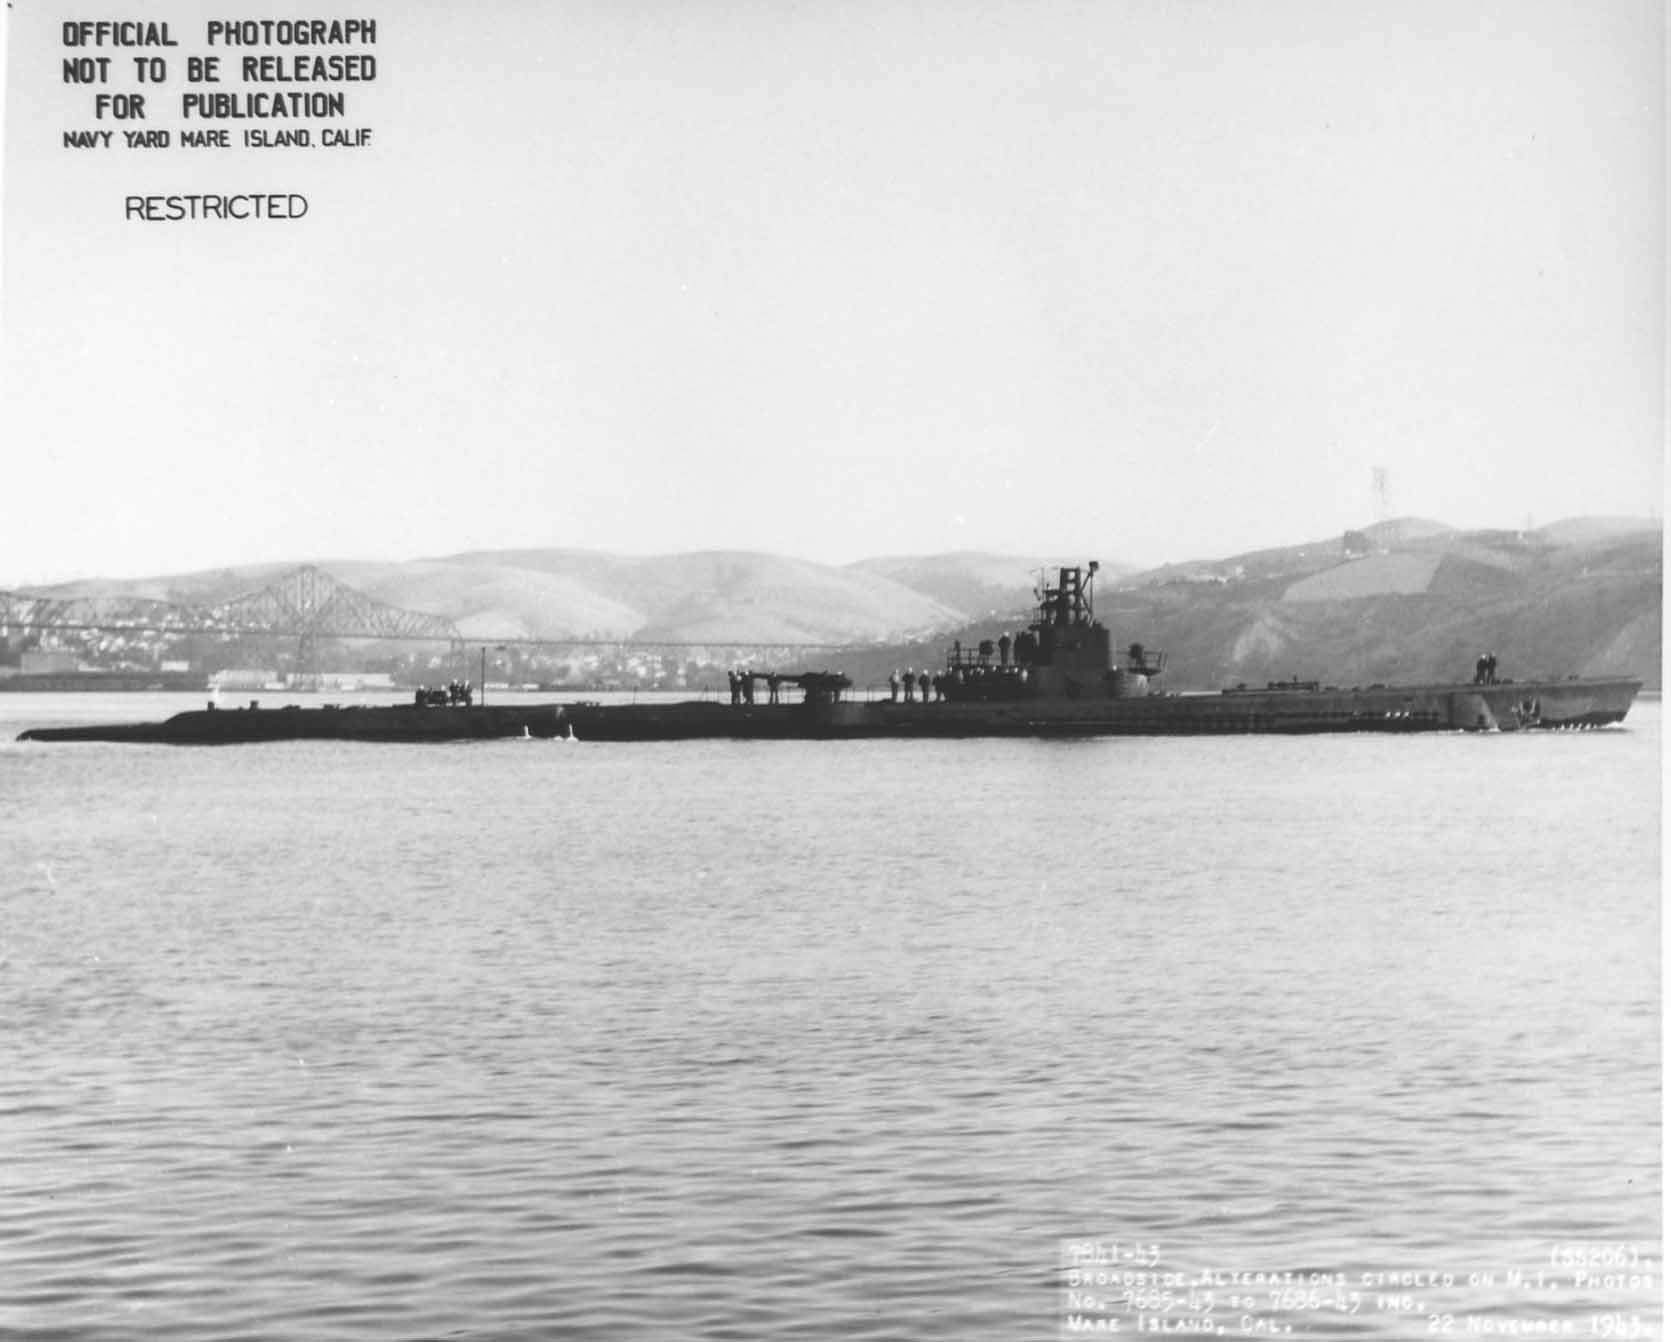 Broadside view of USS Gar off Mare Island Naval Shipyard, California, United States, 22 Nov 1943